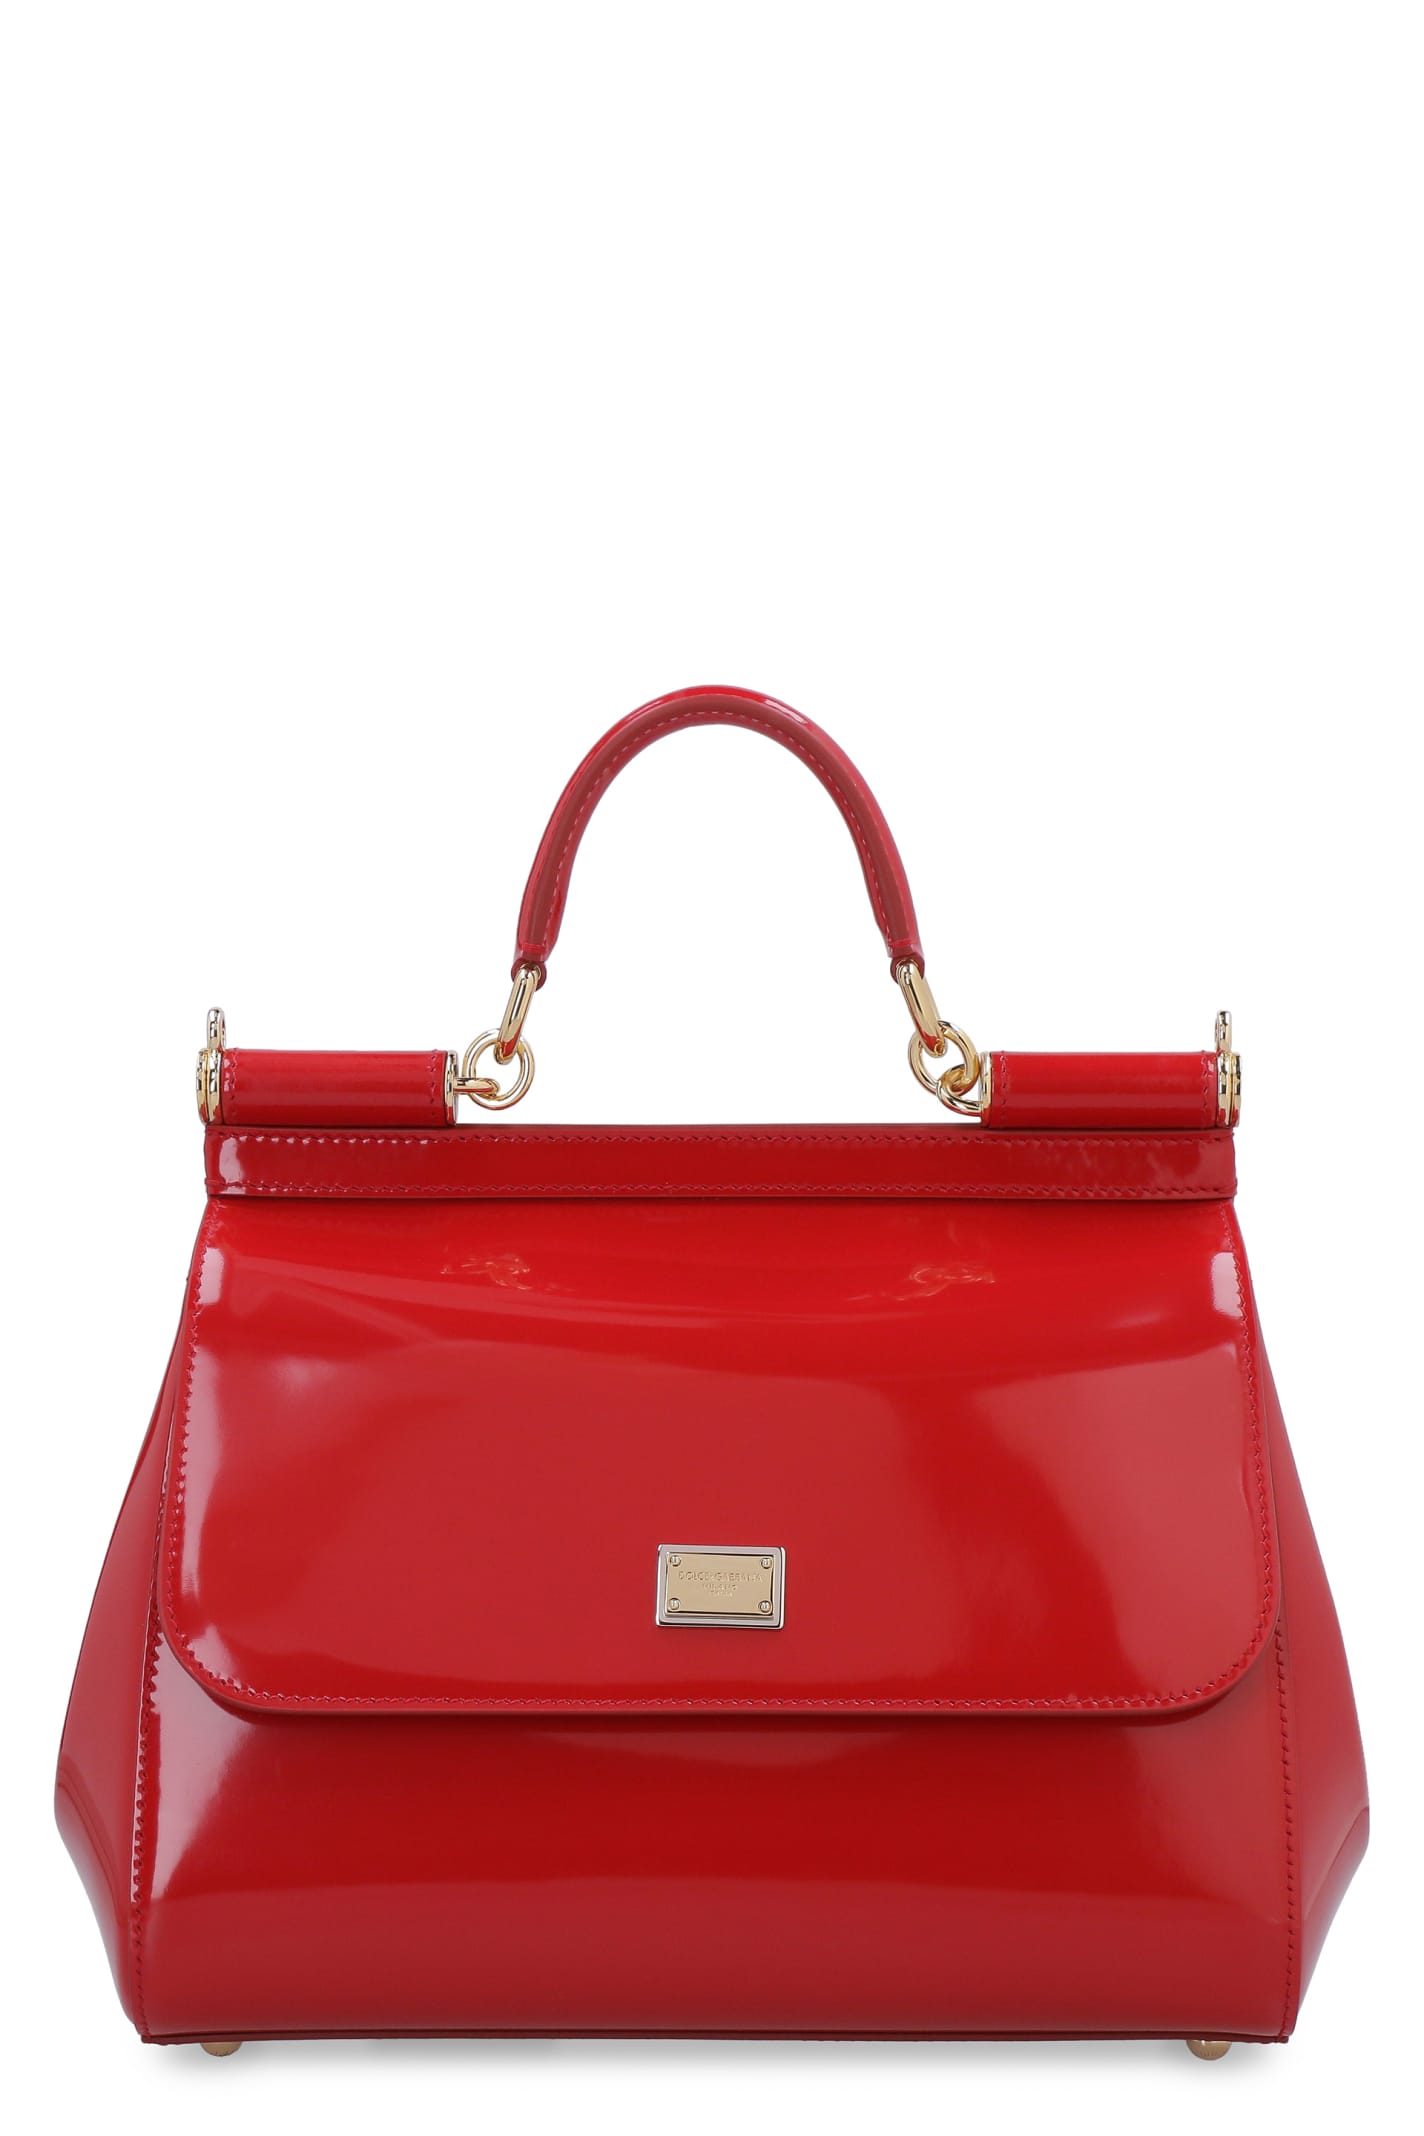 Dolce & Gabbana Sicily Patent Leather Handbag